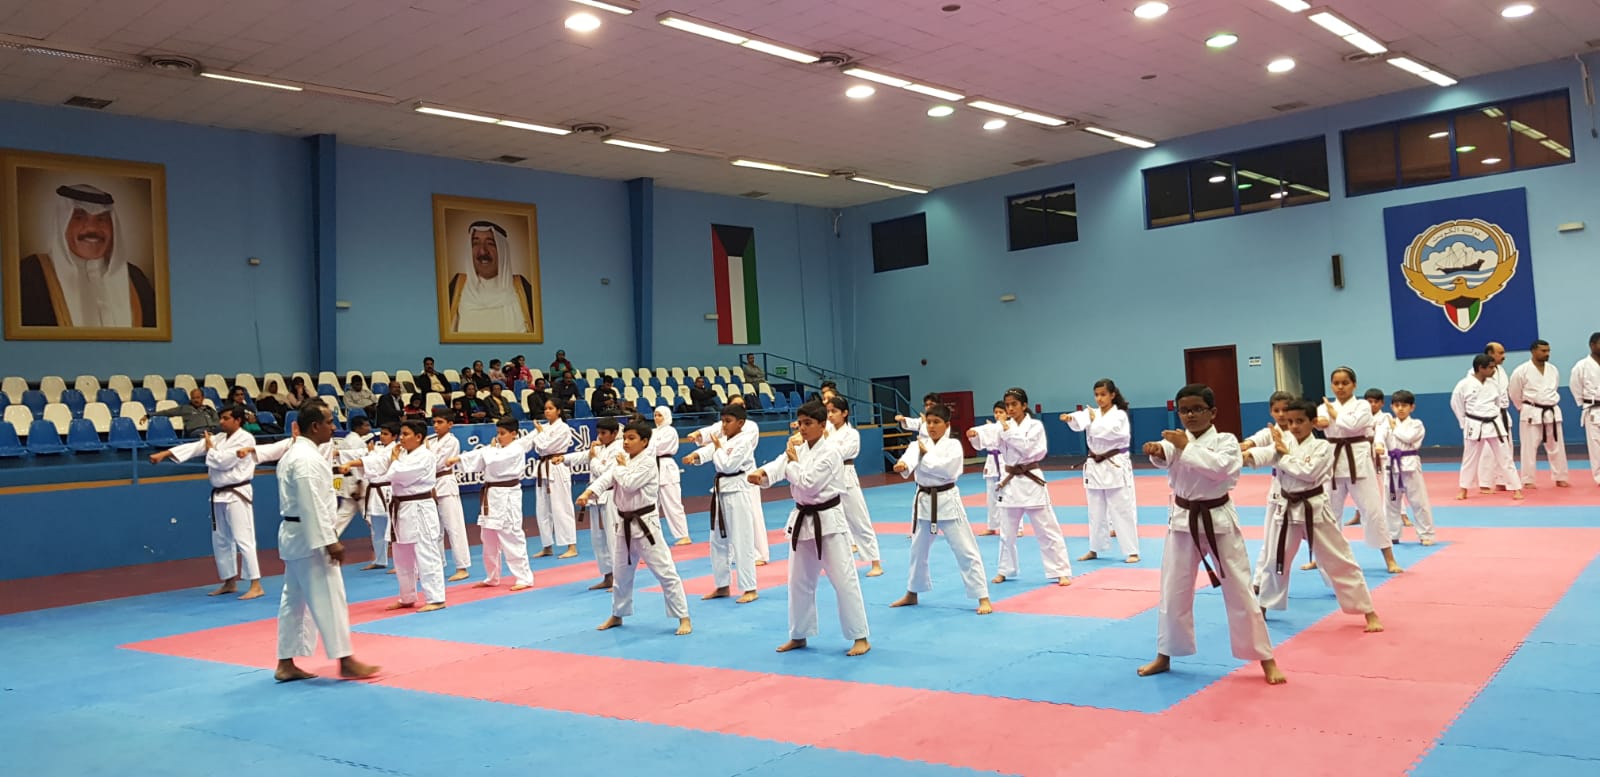 Shito Ryu School of Karate Kuwait - Black Belt Awarding Ceremony.